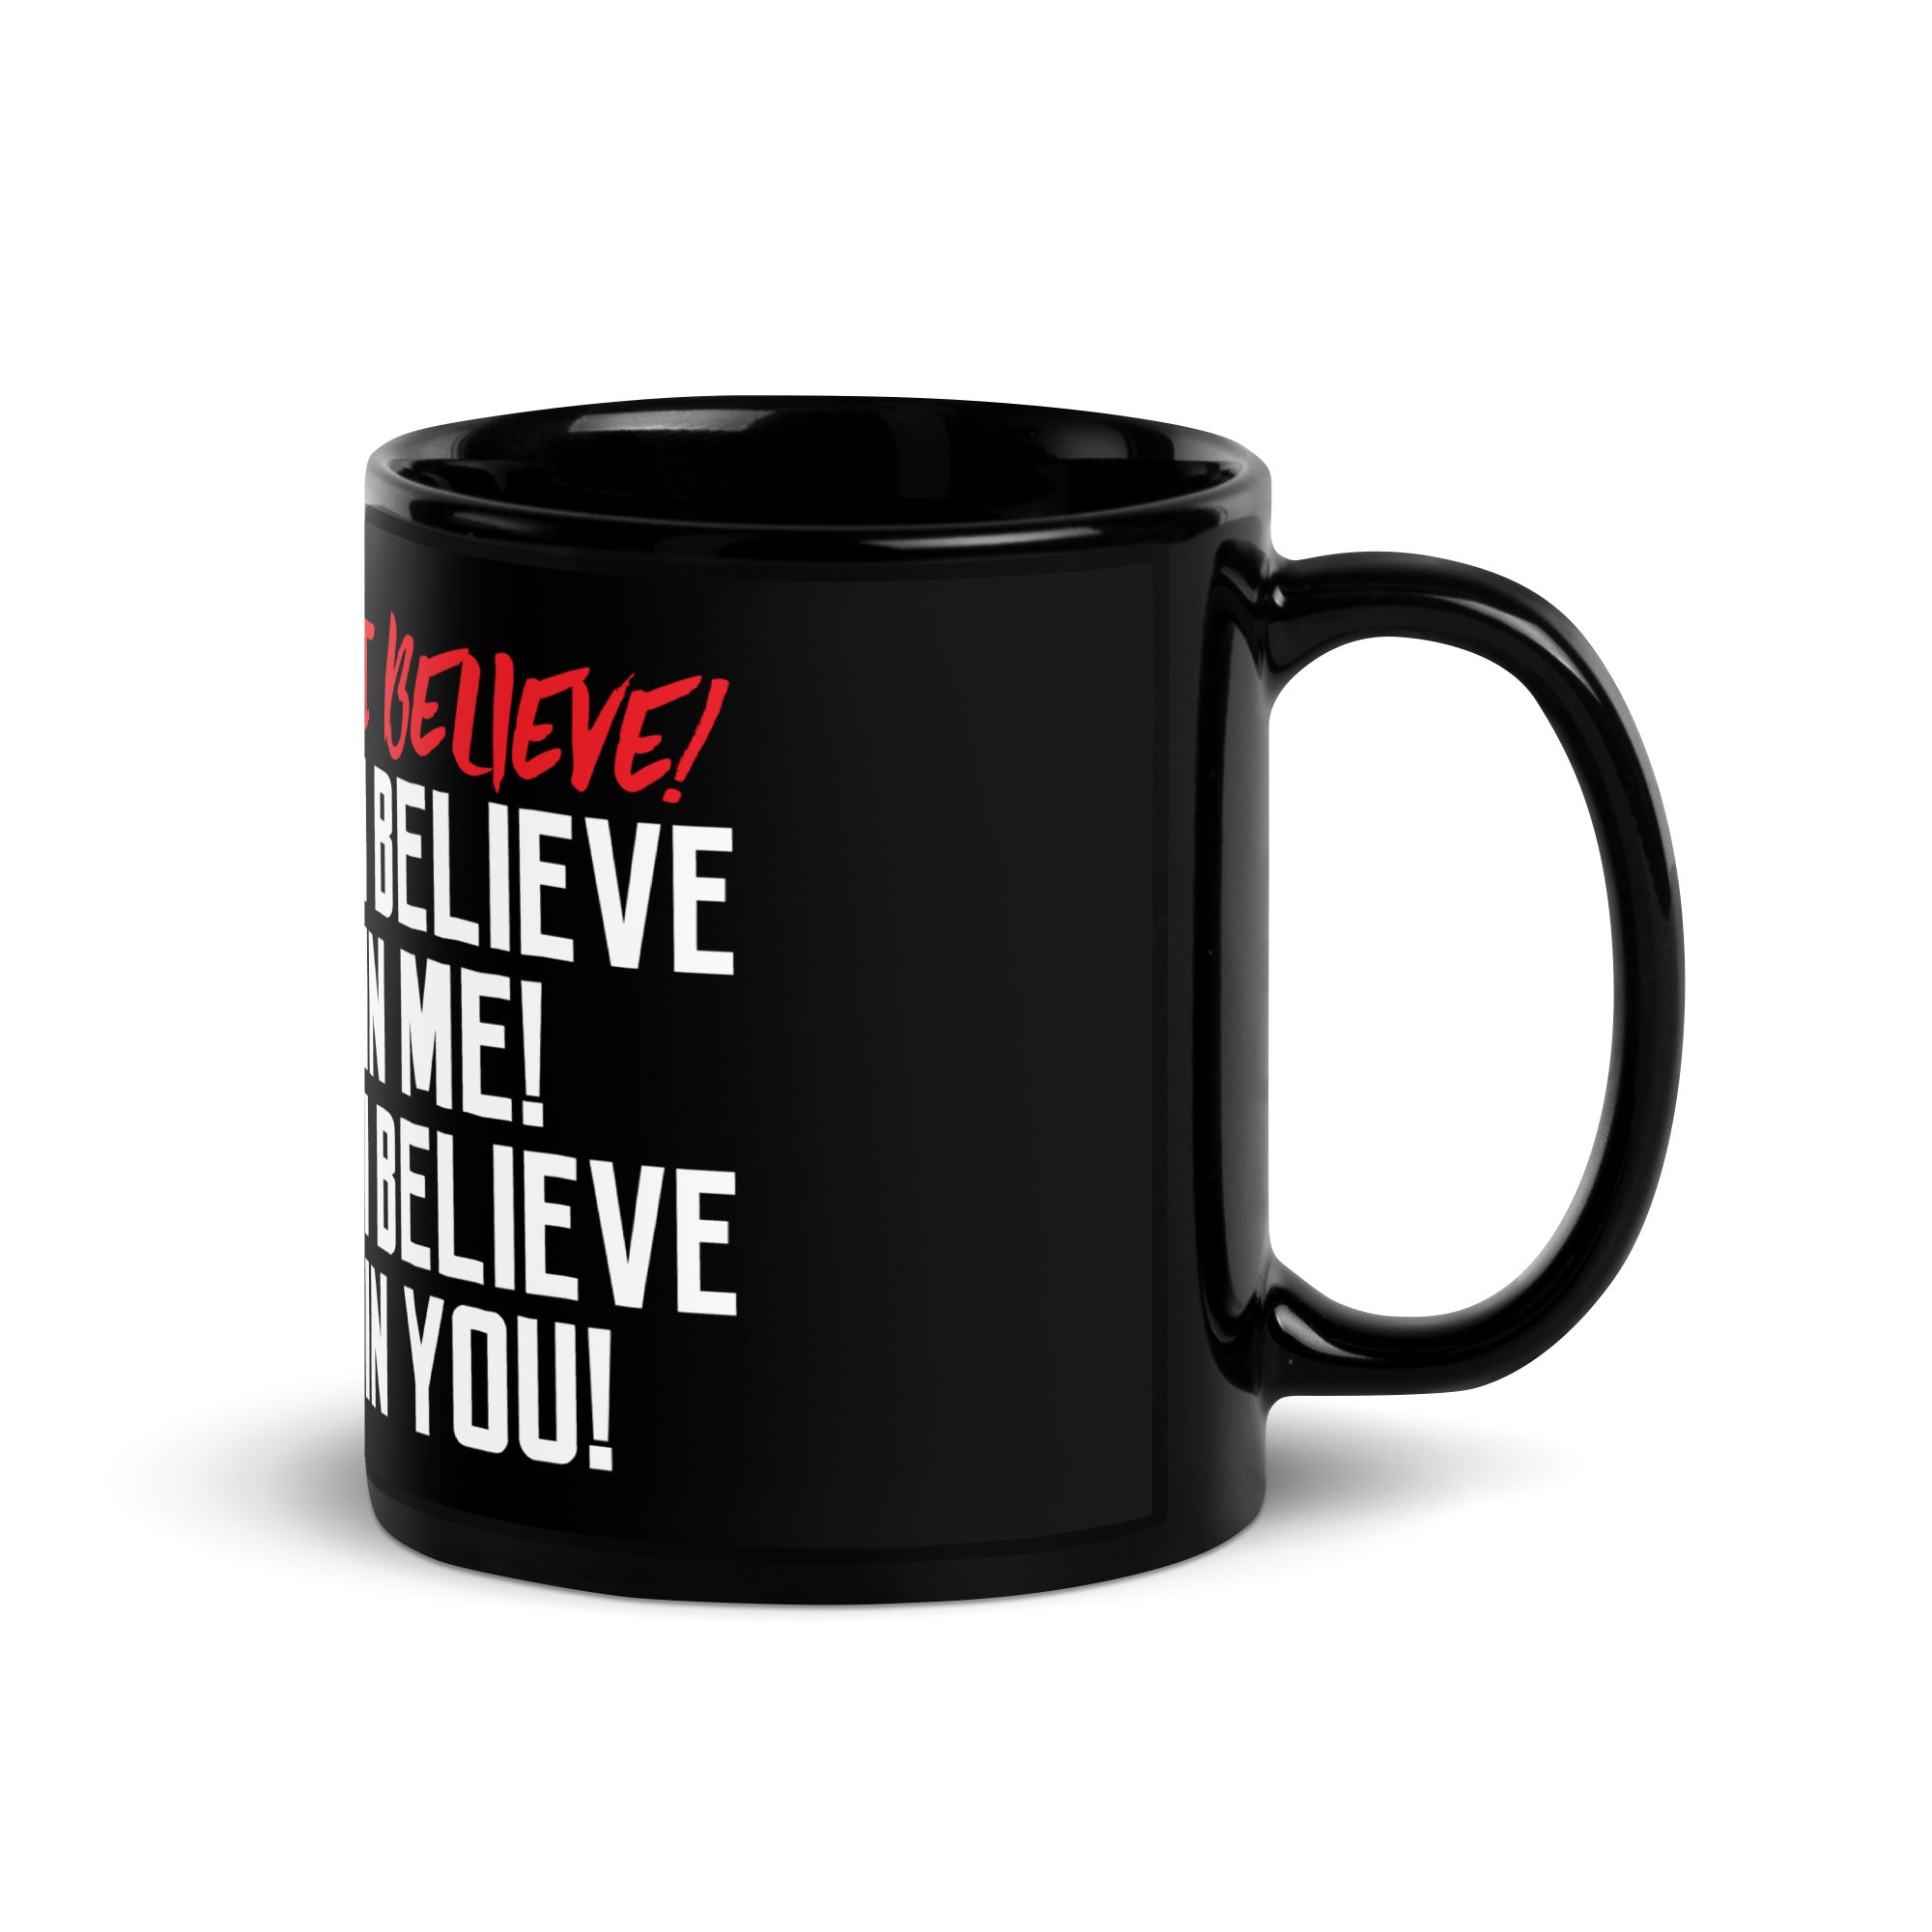 Believe Black Glossy Mug